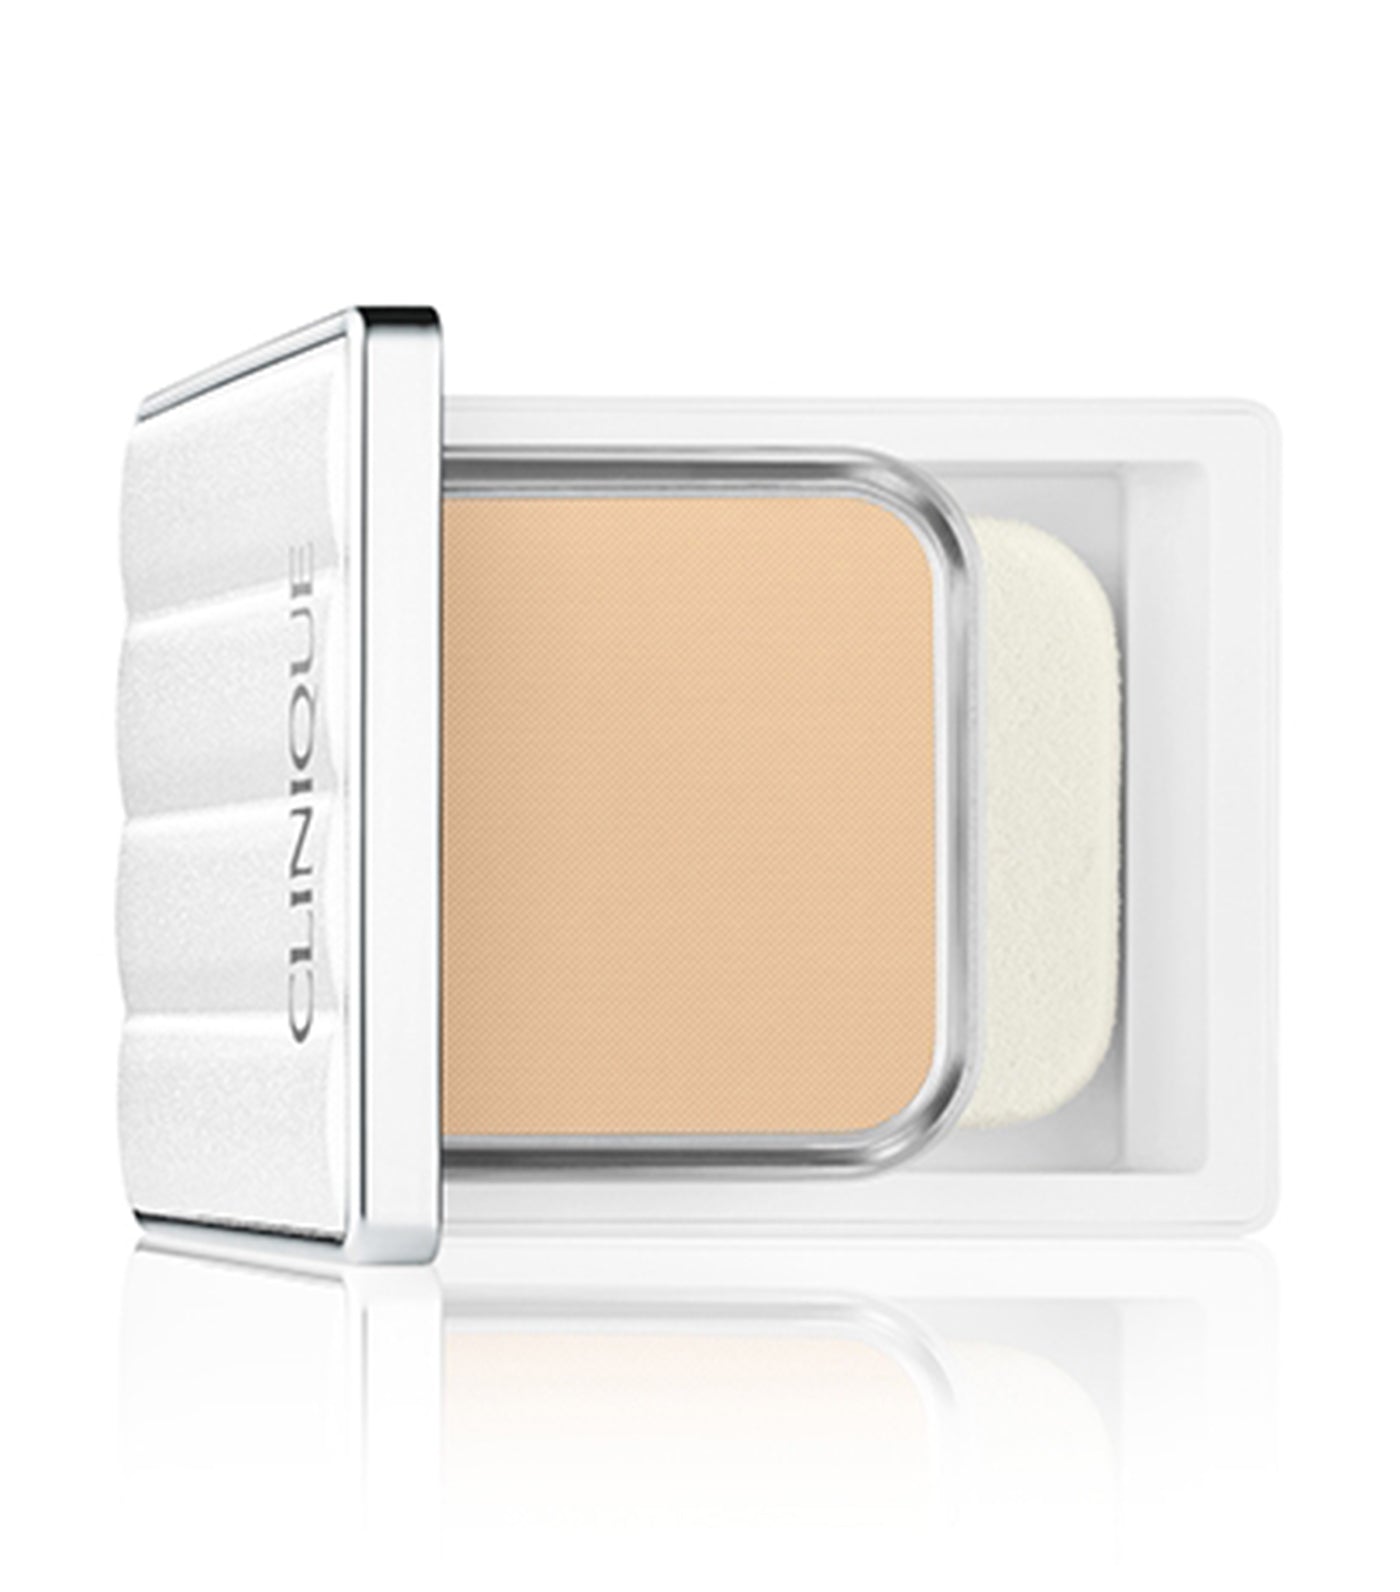 clinique fresh beige even better compact makeup broad spectrum spf 15